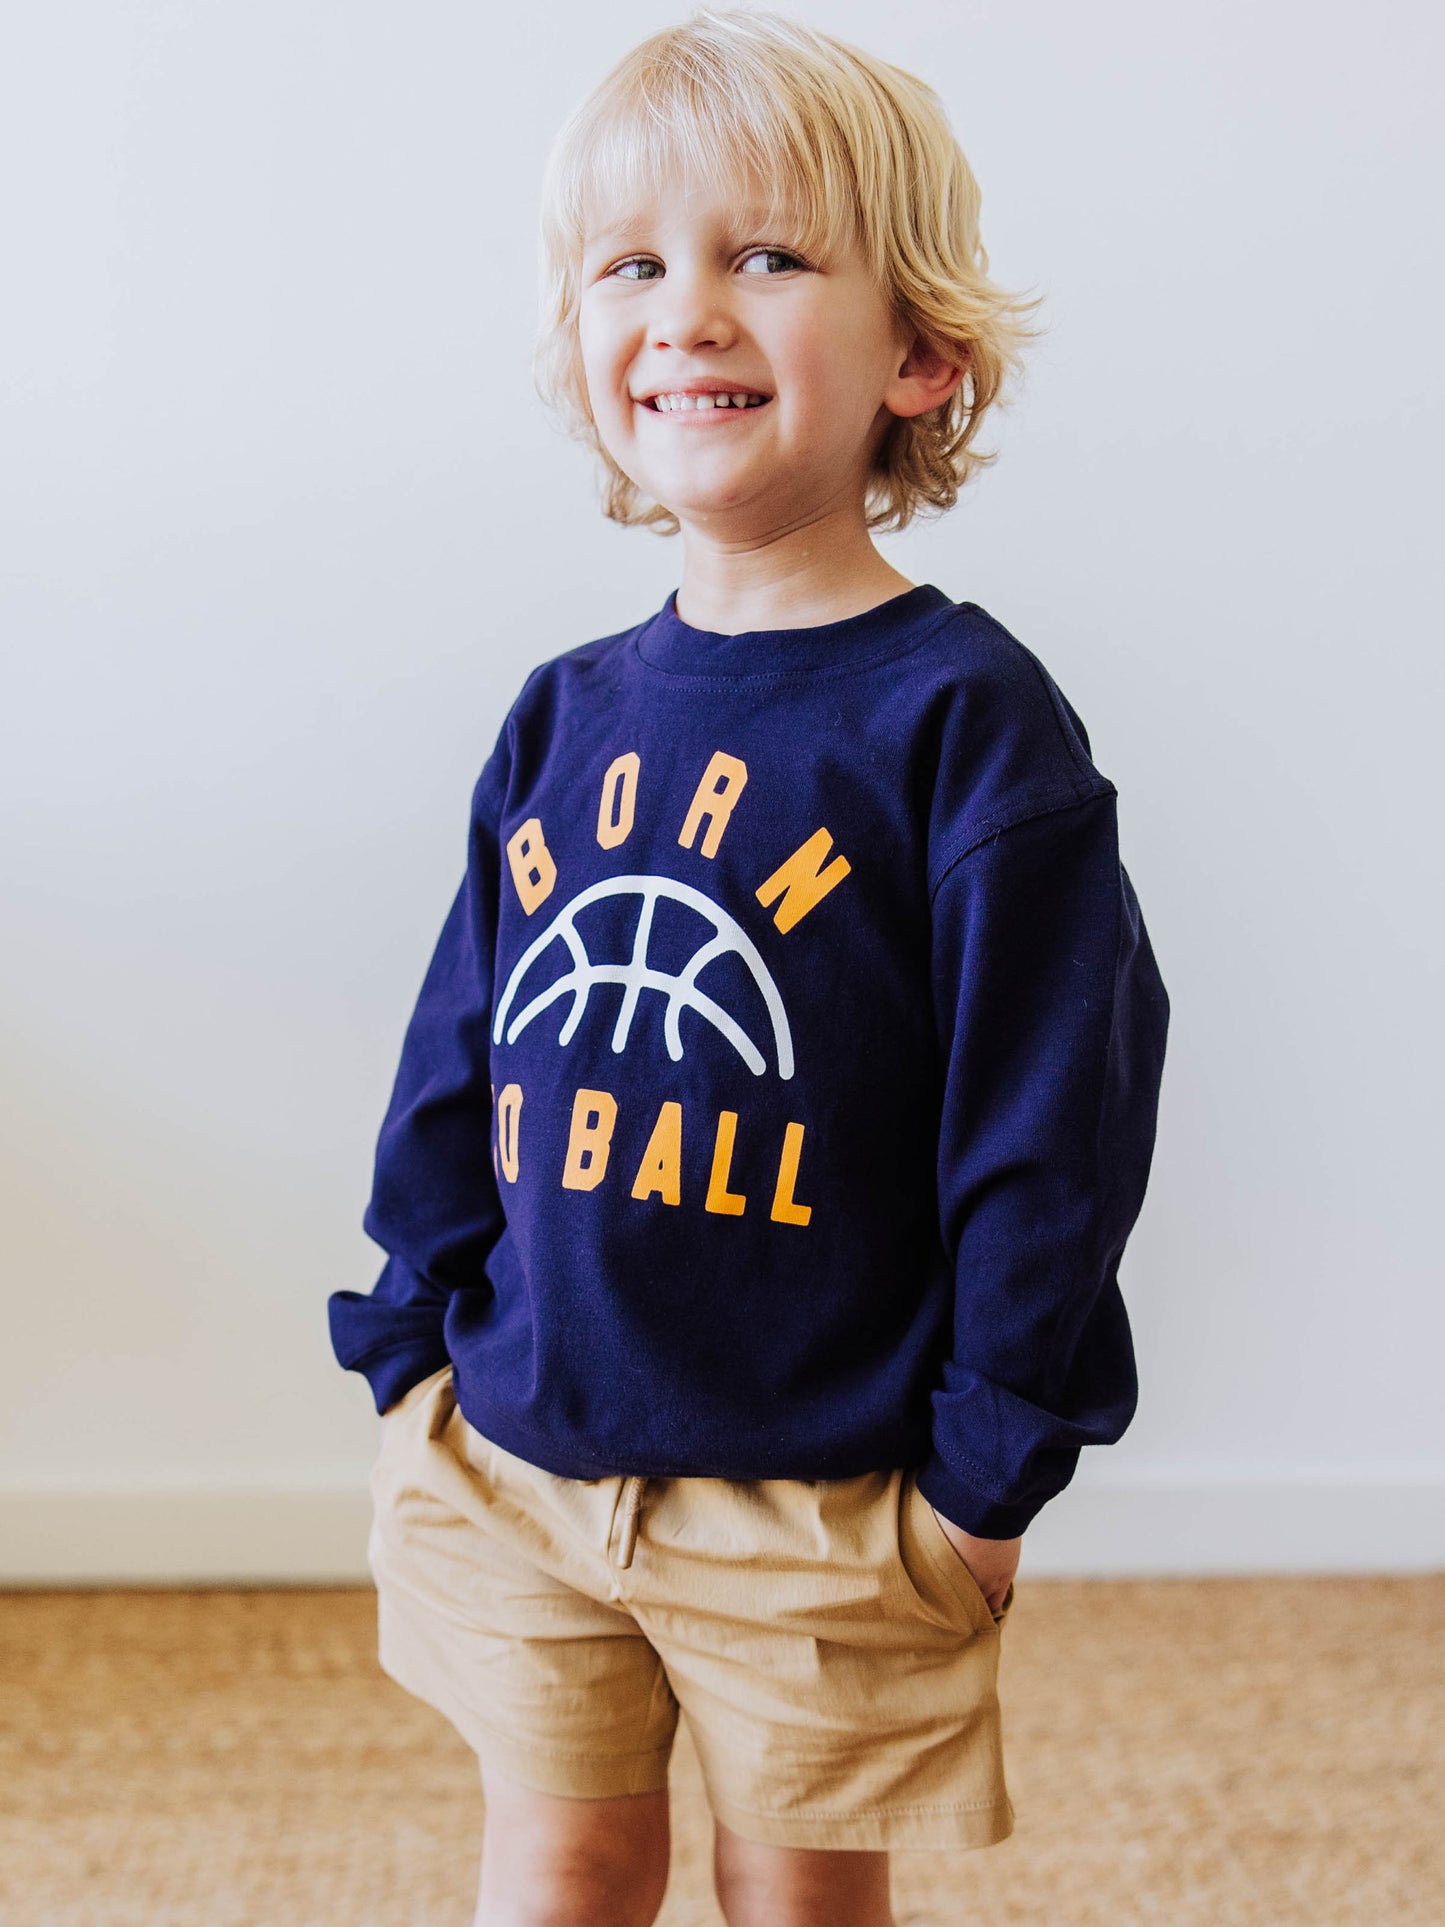 Warm Knit Sweatshirt - Born to Ball Navy